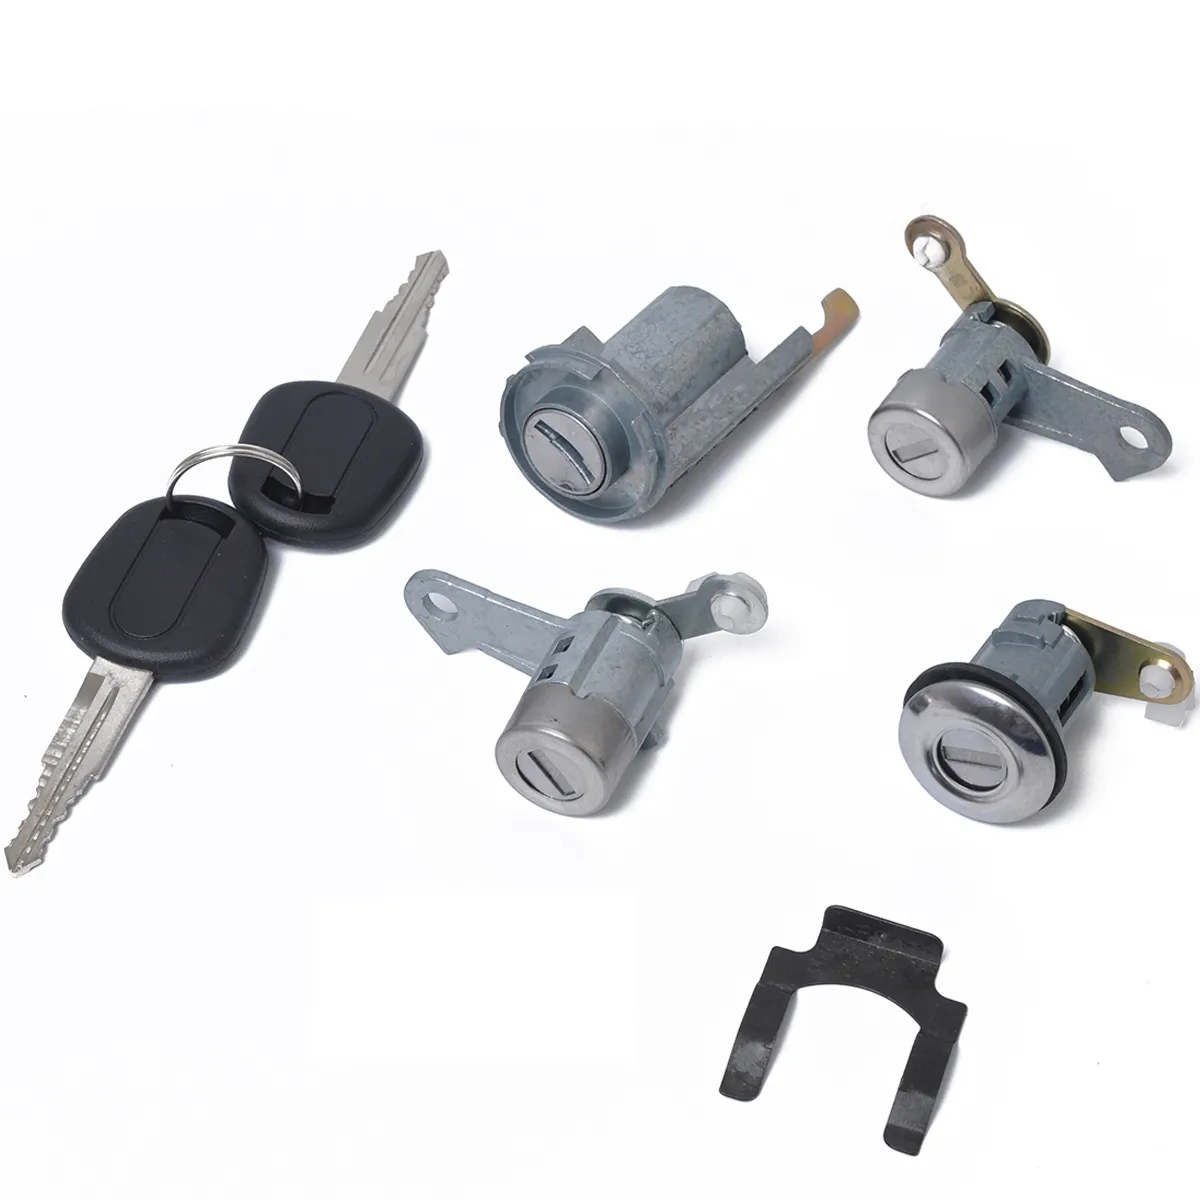 Door Lock Cylinder Set With 2 Keys Wholesale Price at BAJUTU for Buick Excelle 2001-2002 96548692 96548493Ebay,Wish Hot Seller